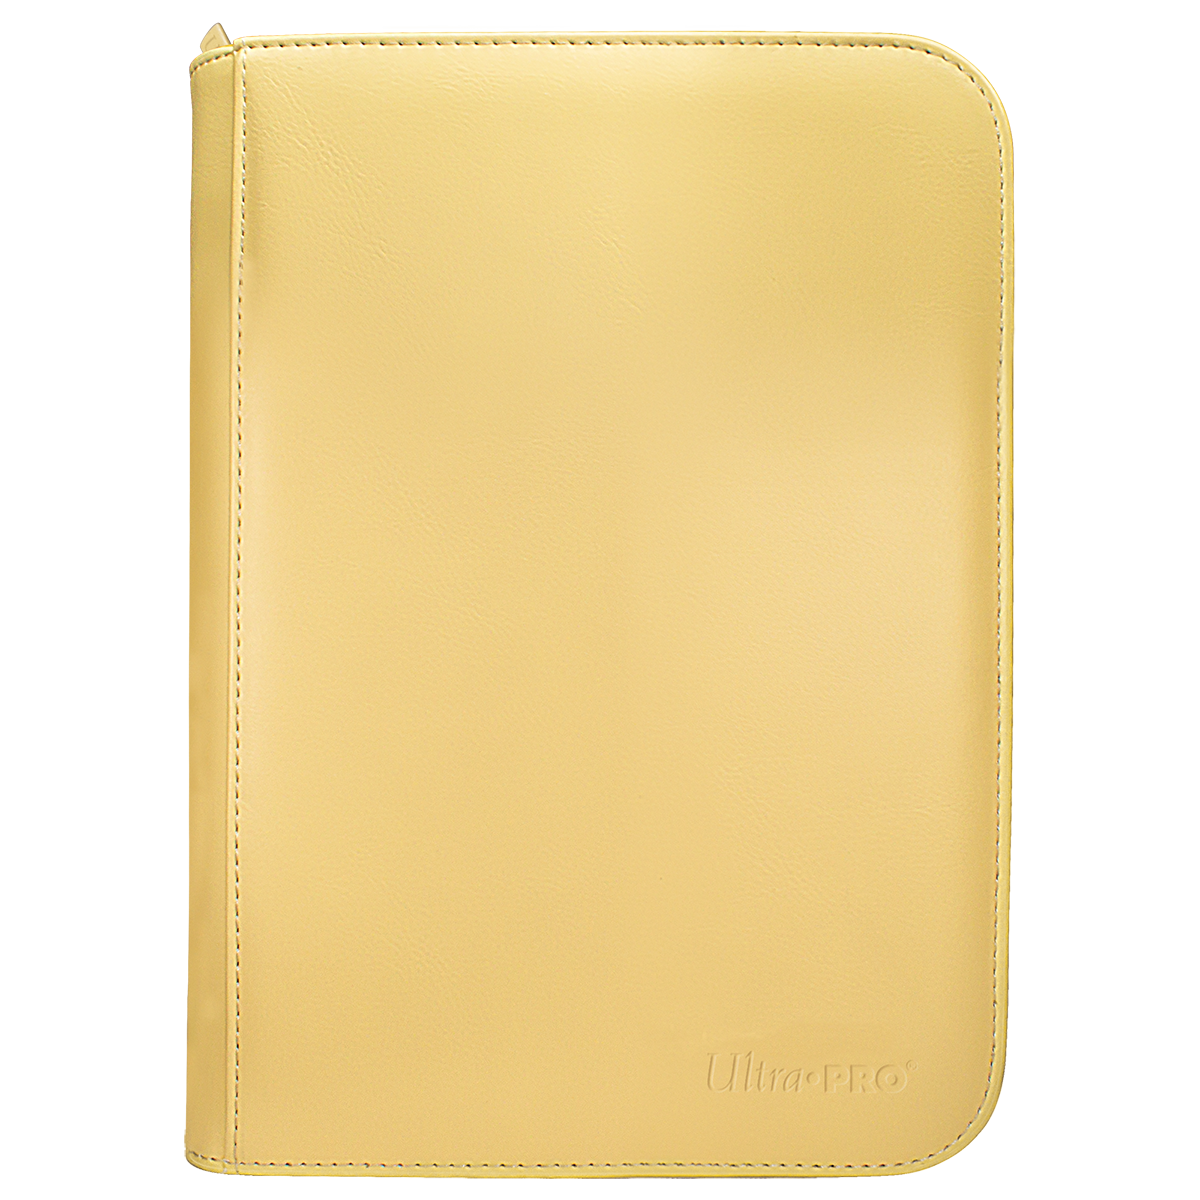 4-Pocket Ultra Pro Vivid Zippered Binder - Yellow